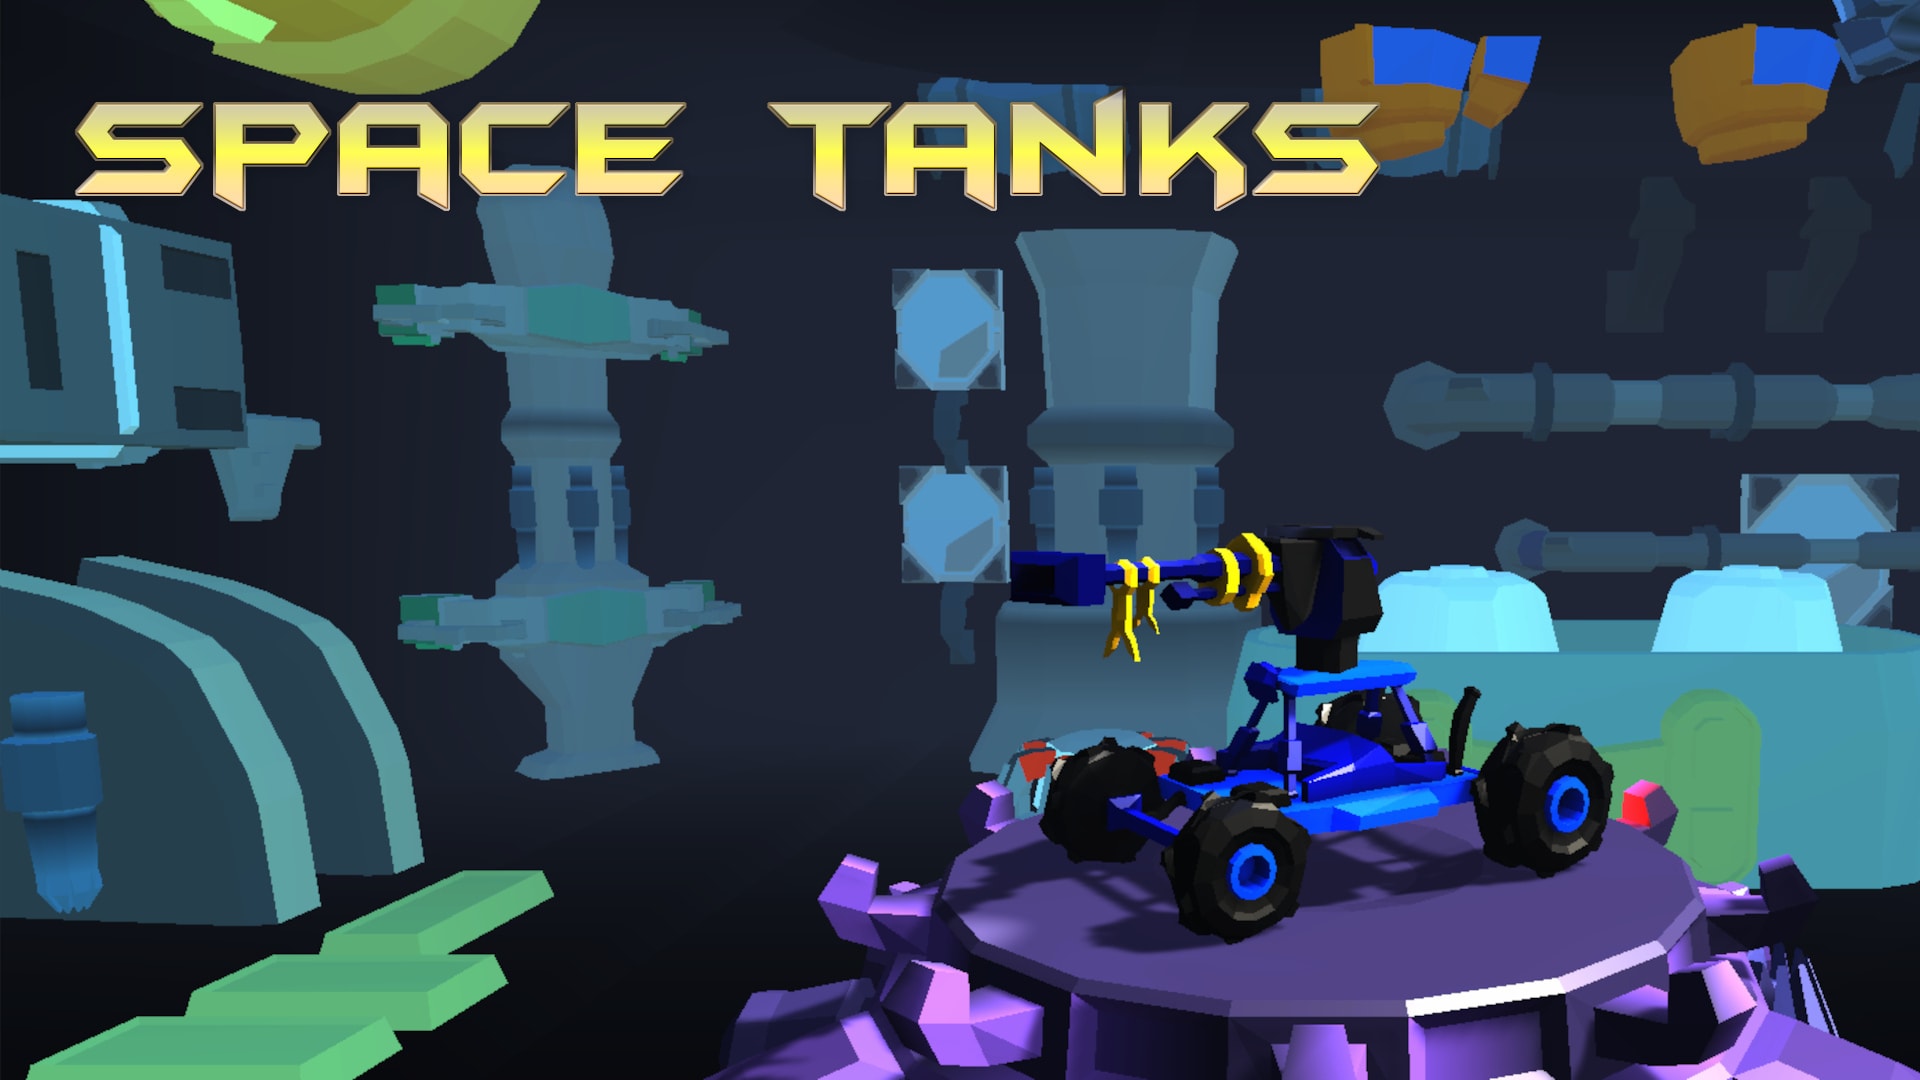 Space Tanks